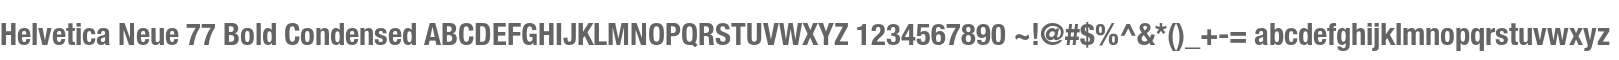 Helvetica Neue 77 Bold Condensed